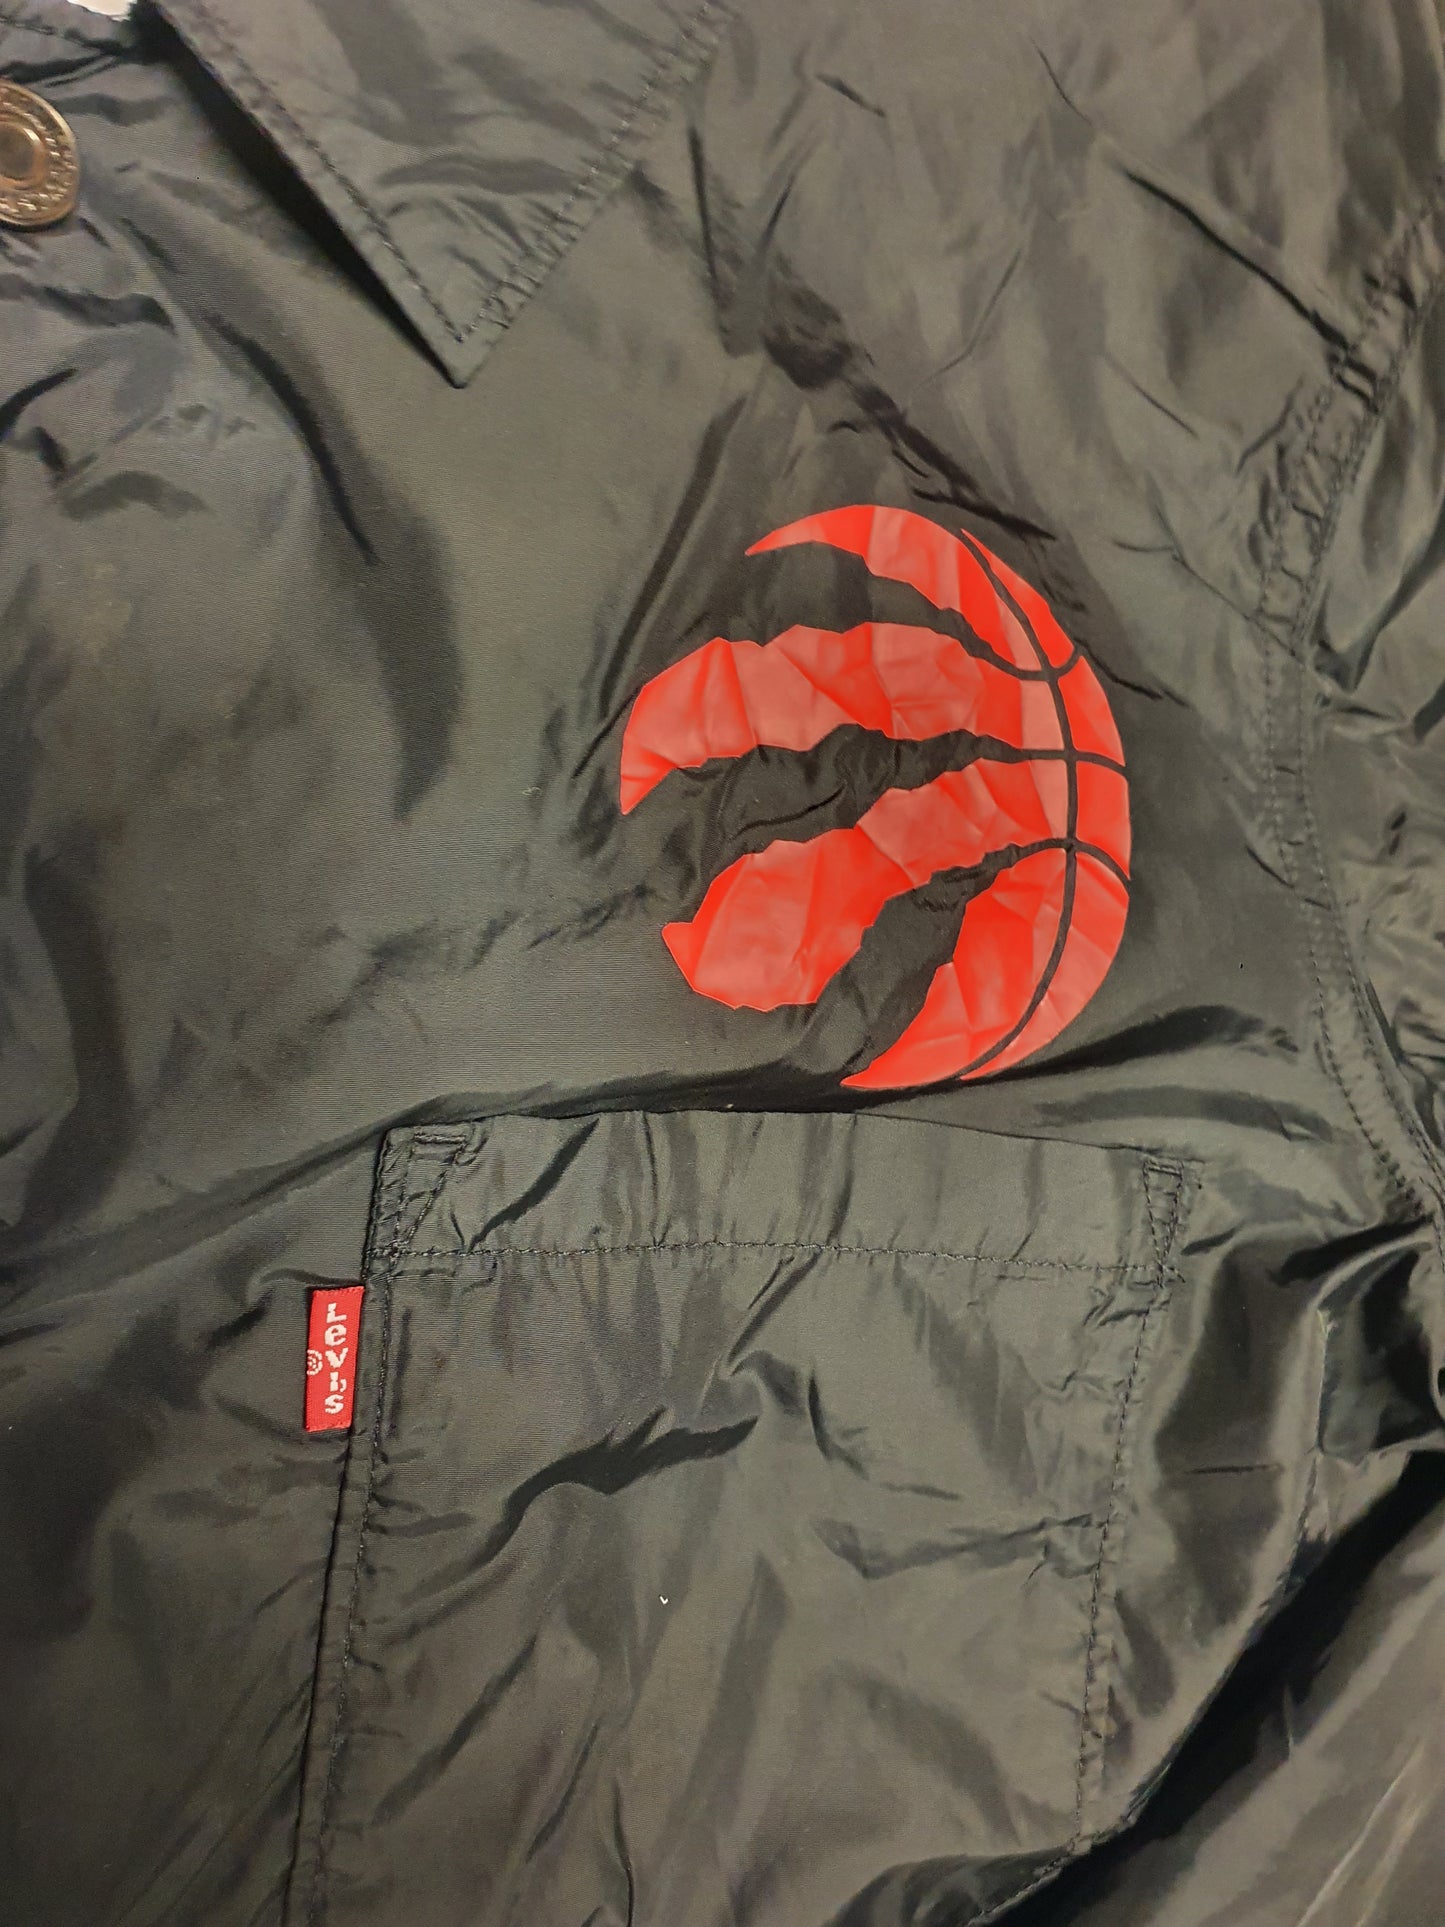 Toronto Raptors Jacket Size Medium